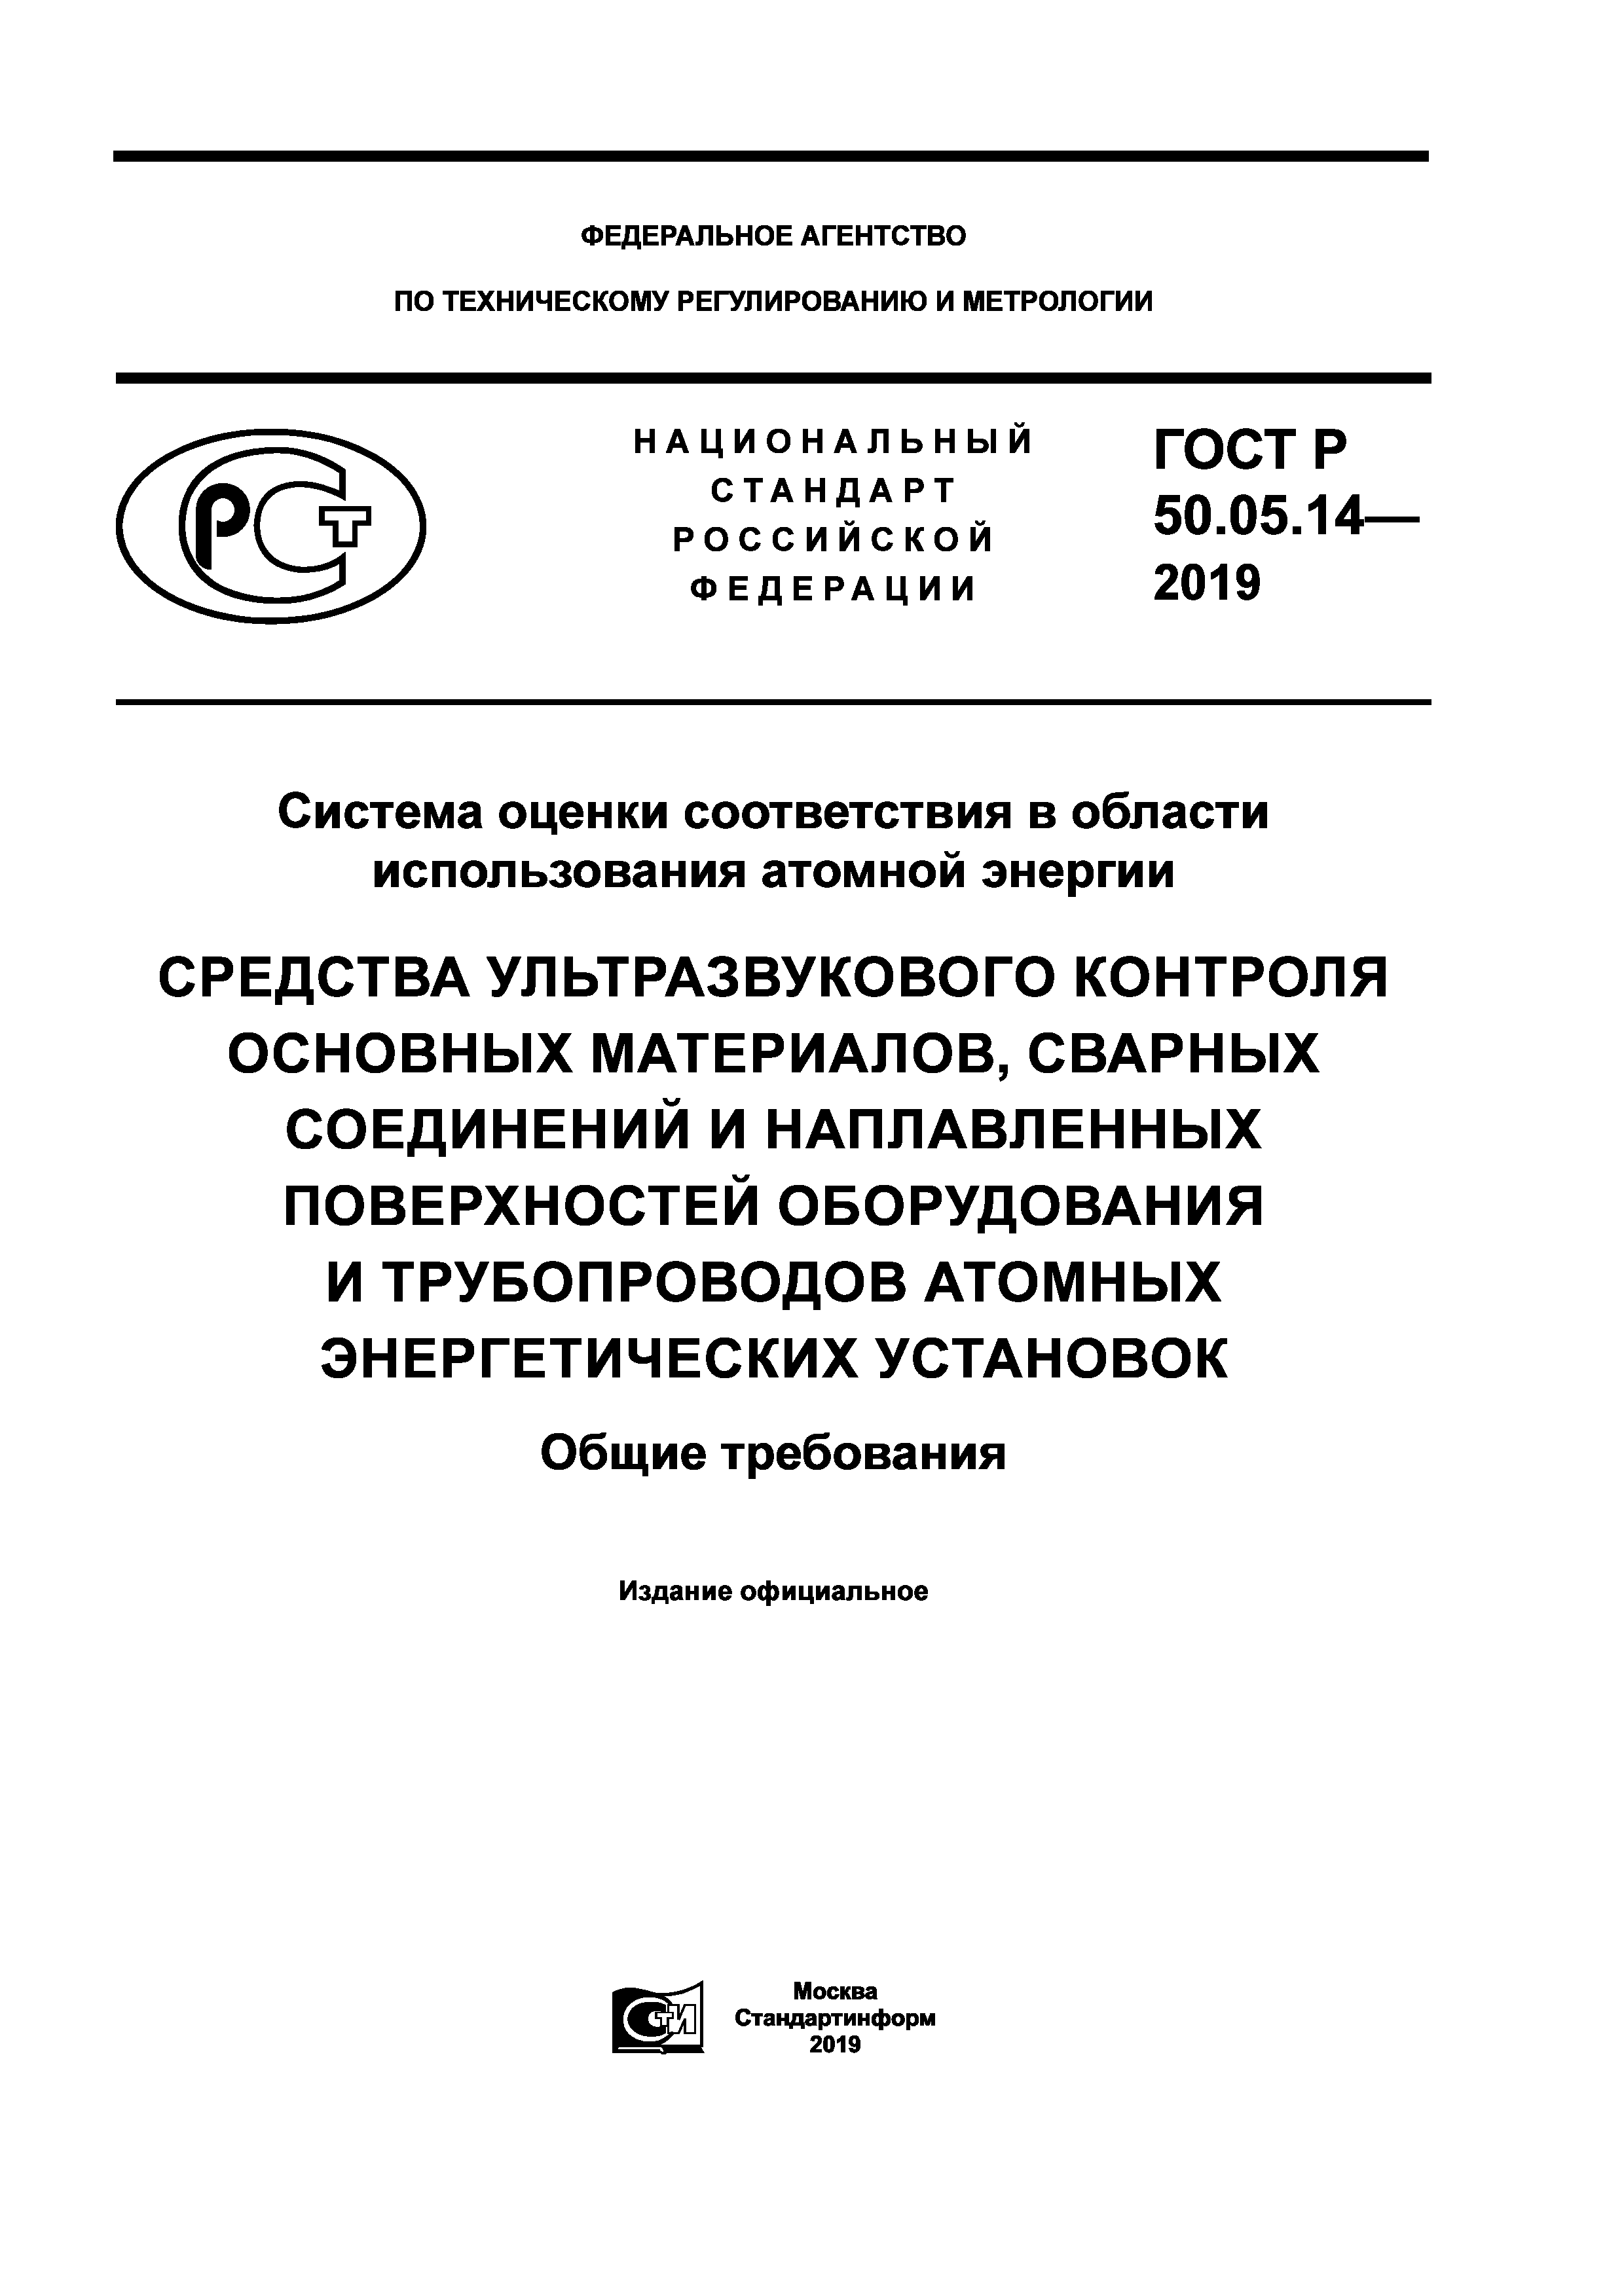 ГОСТ Р 50.05.14-2019